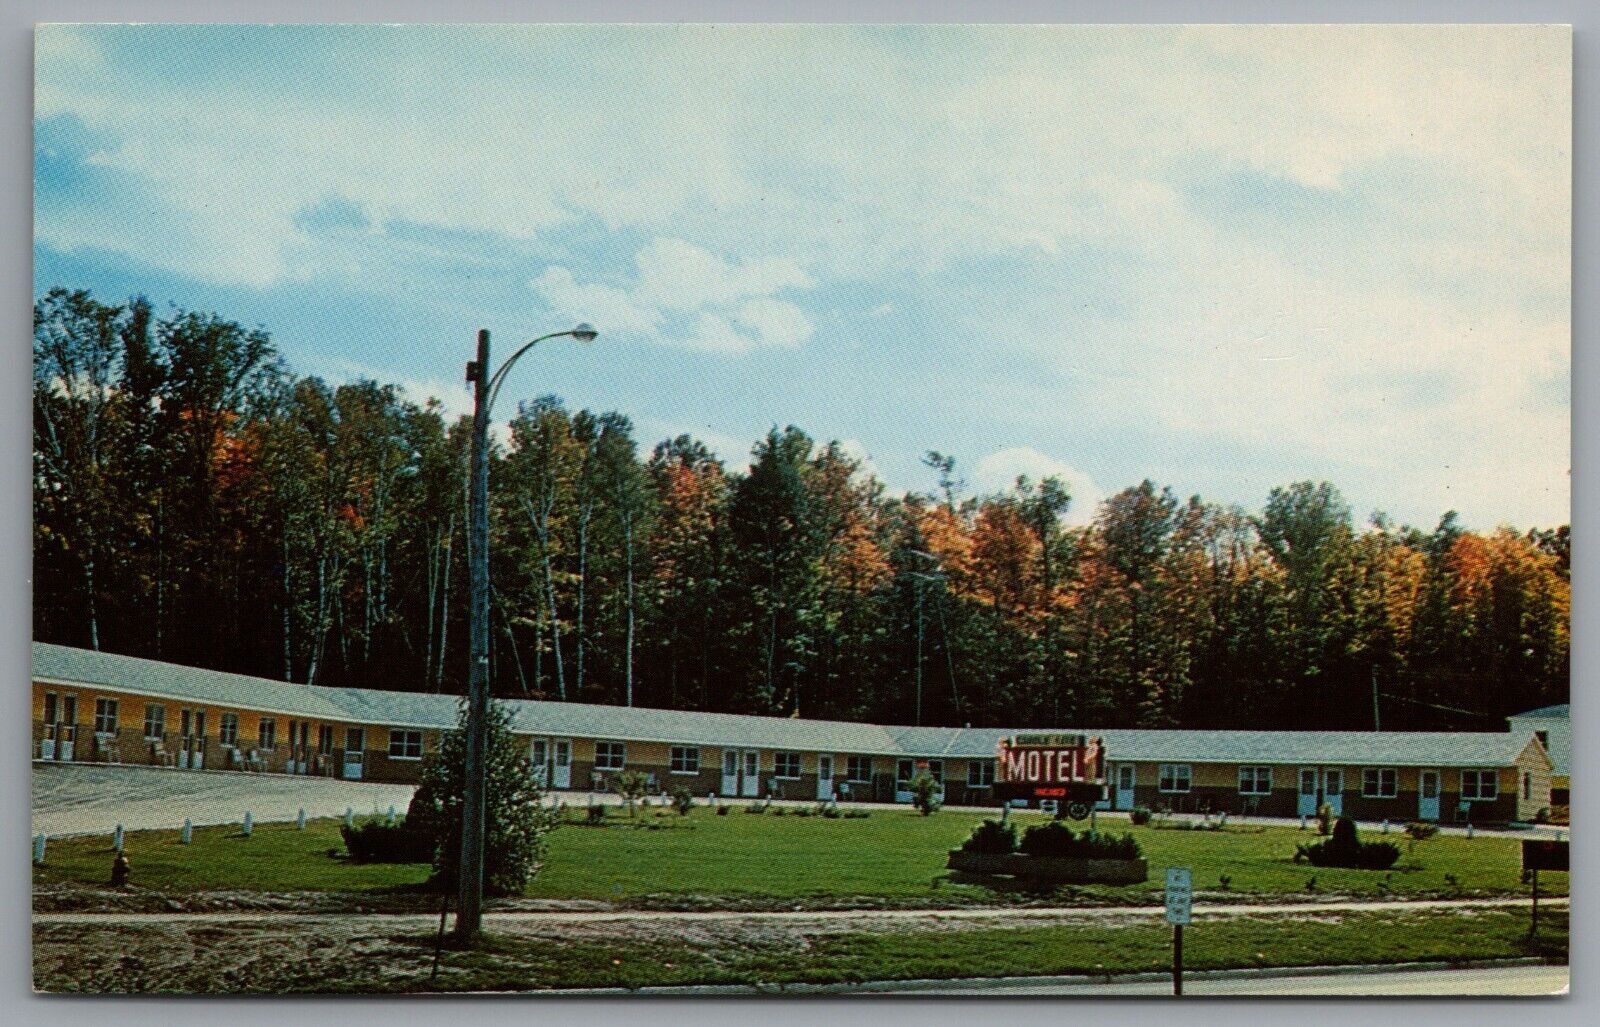 Powers MI Candlelite Motel c1961 US Hwy 2 Roadside Chrome Postcard